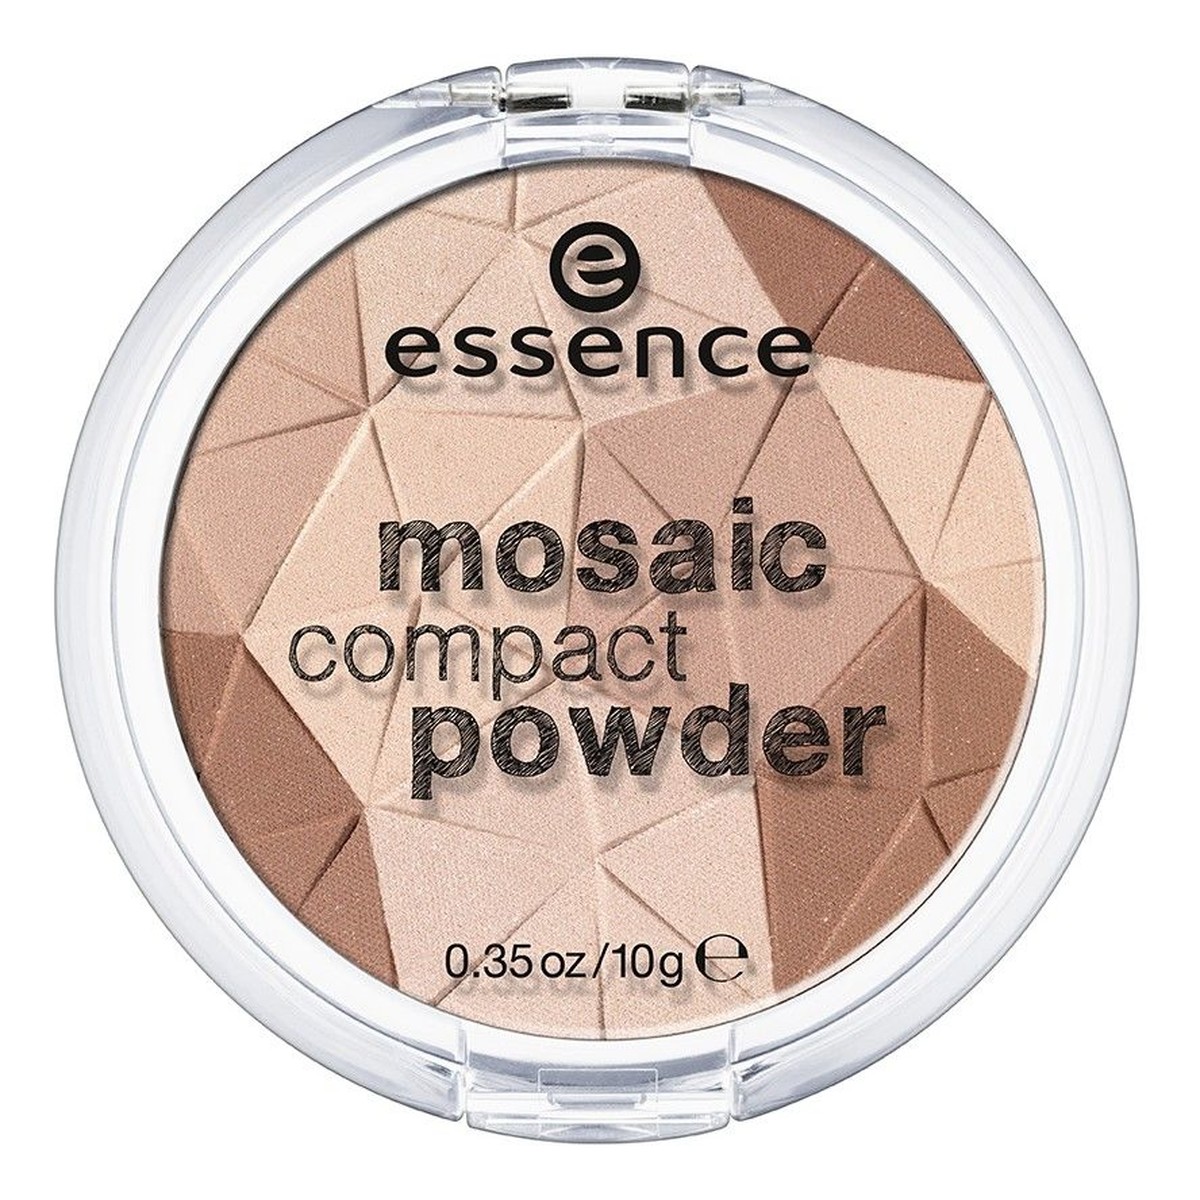 Essence Mosaic Compact Powder puder brązujący 10g